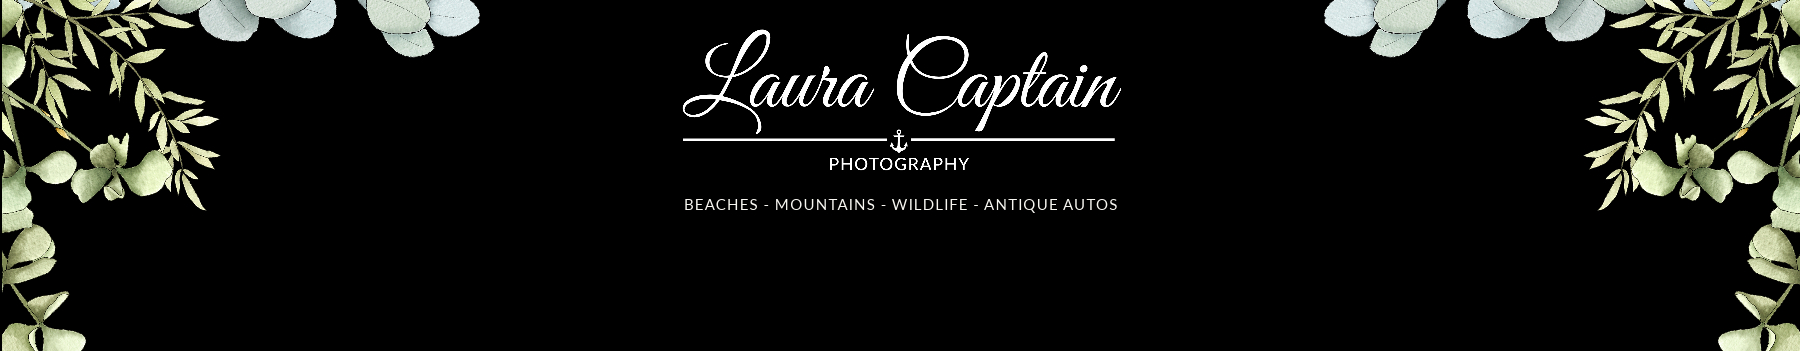 Laura Captain's profile banner